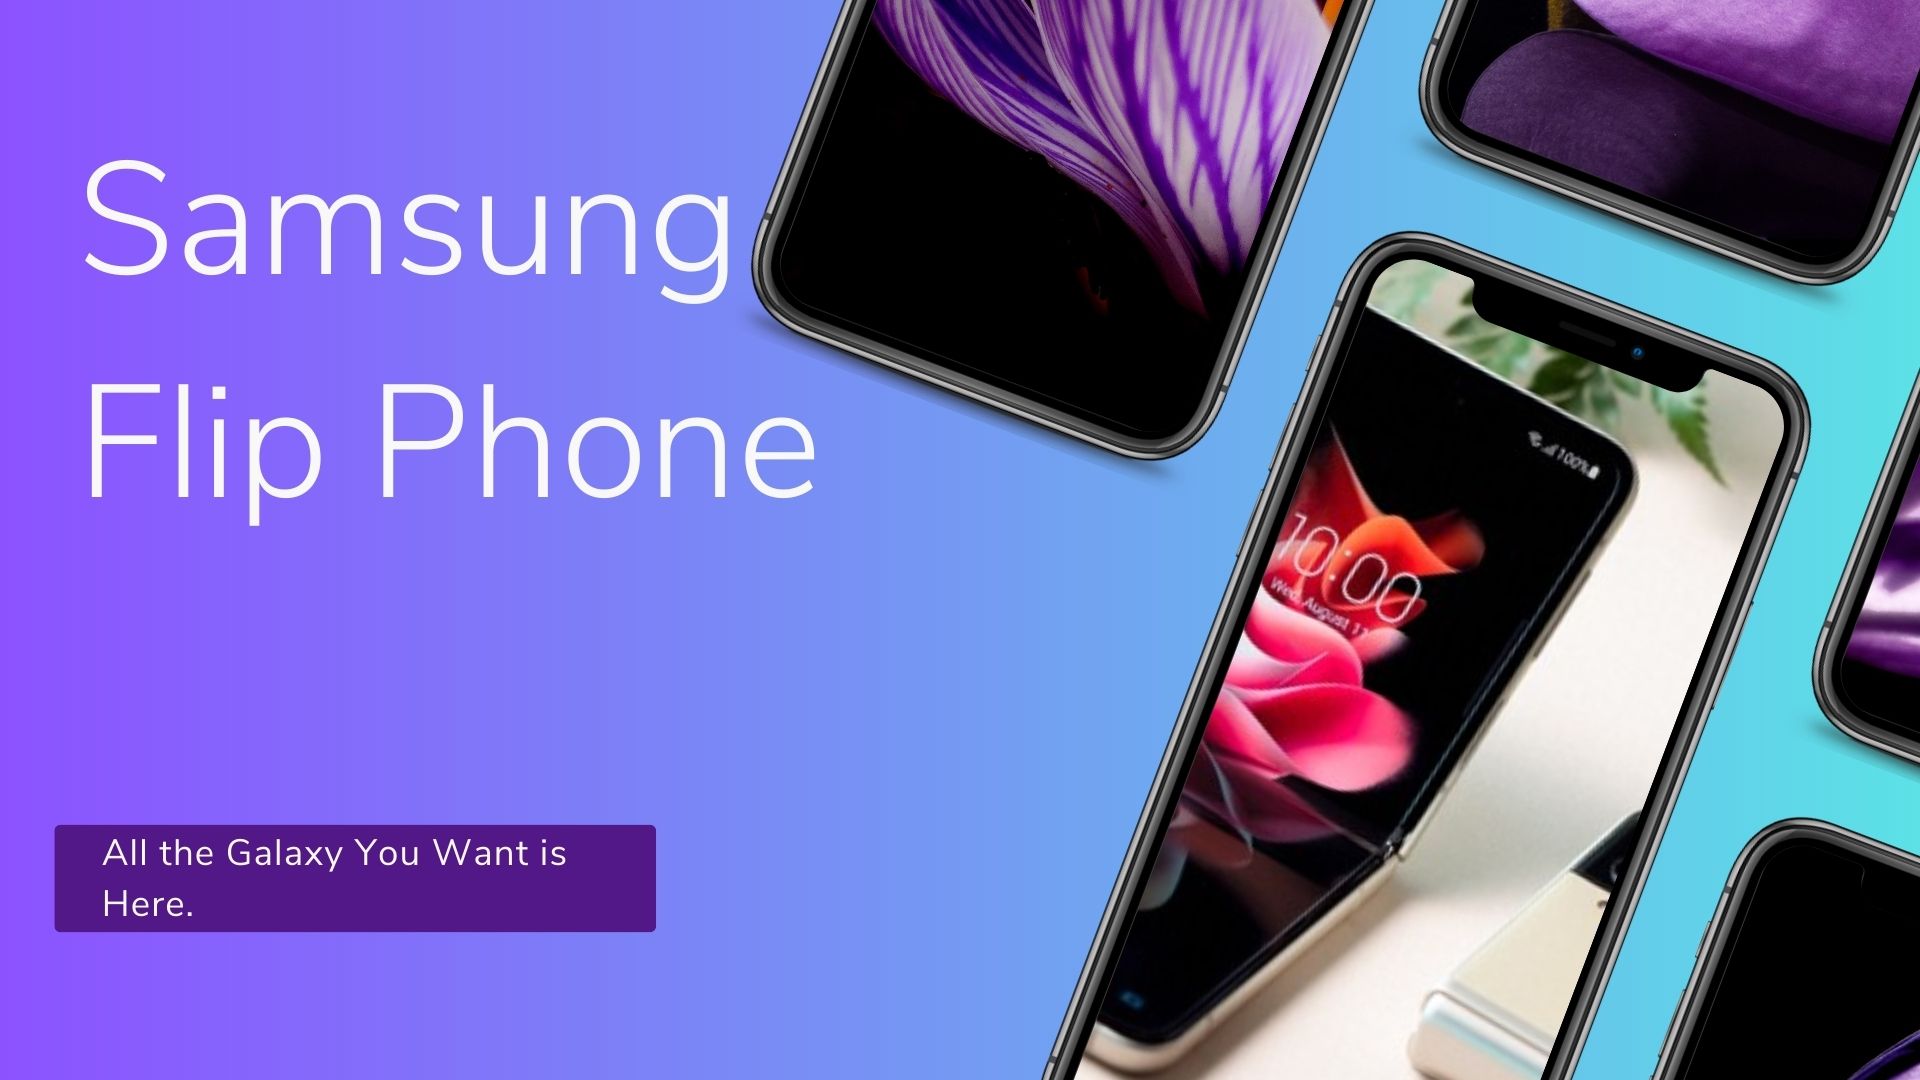 Samsung Flip Phone: